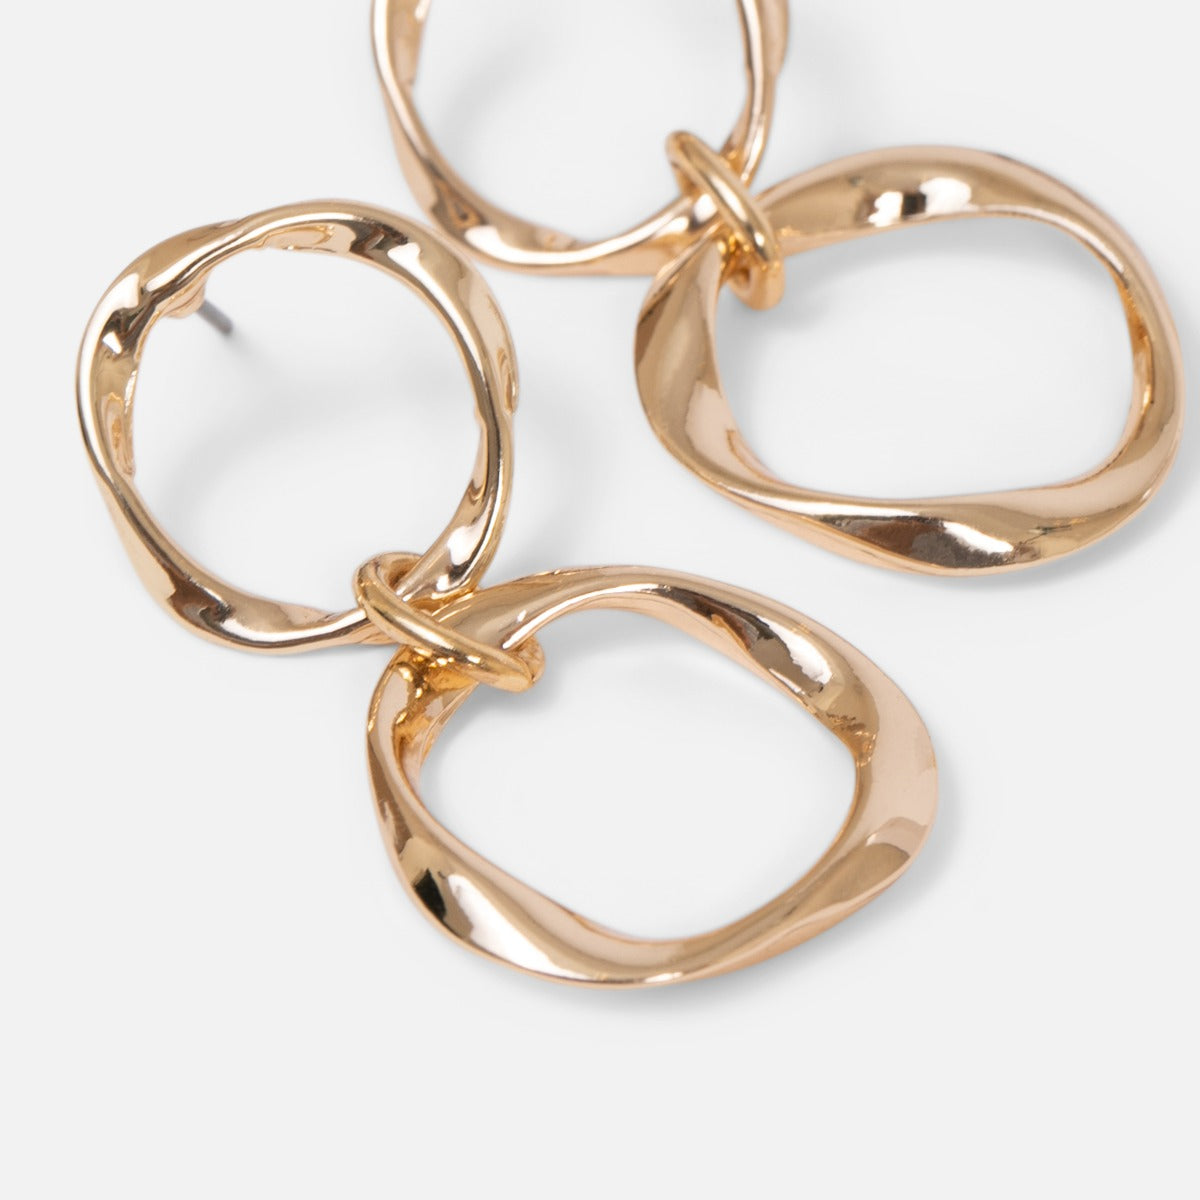 Golden earrings with two wavy hoops   